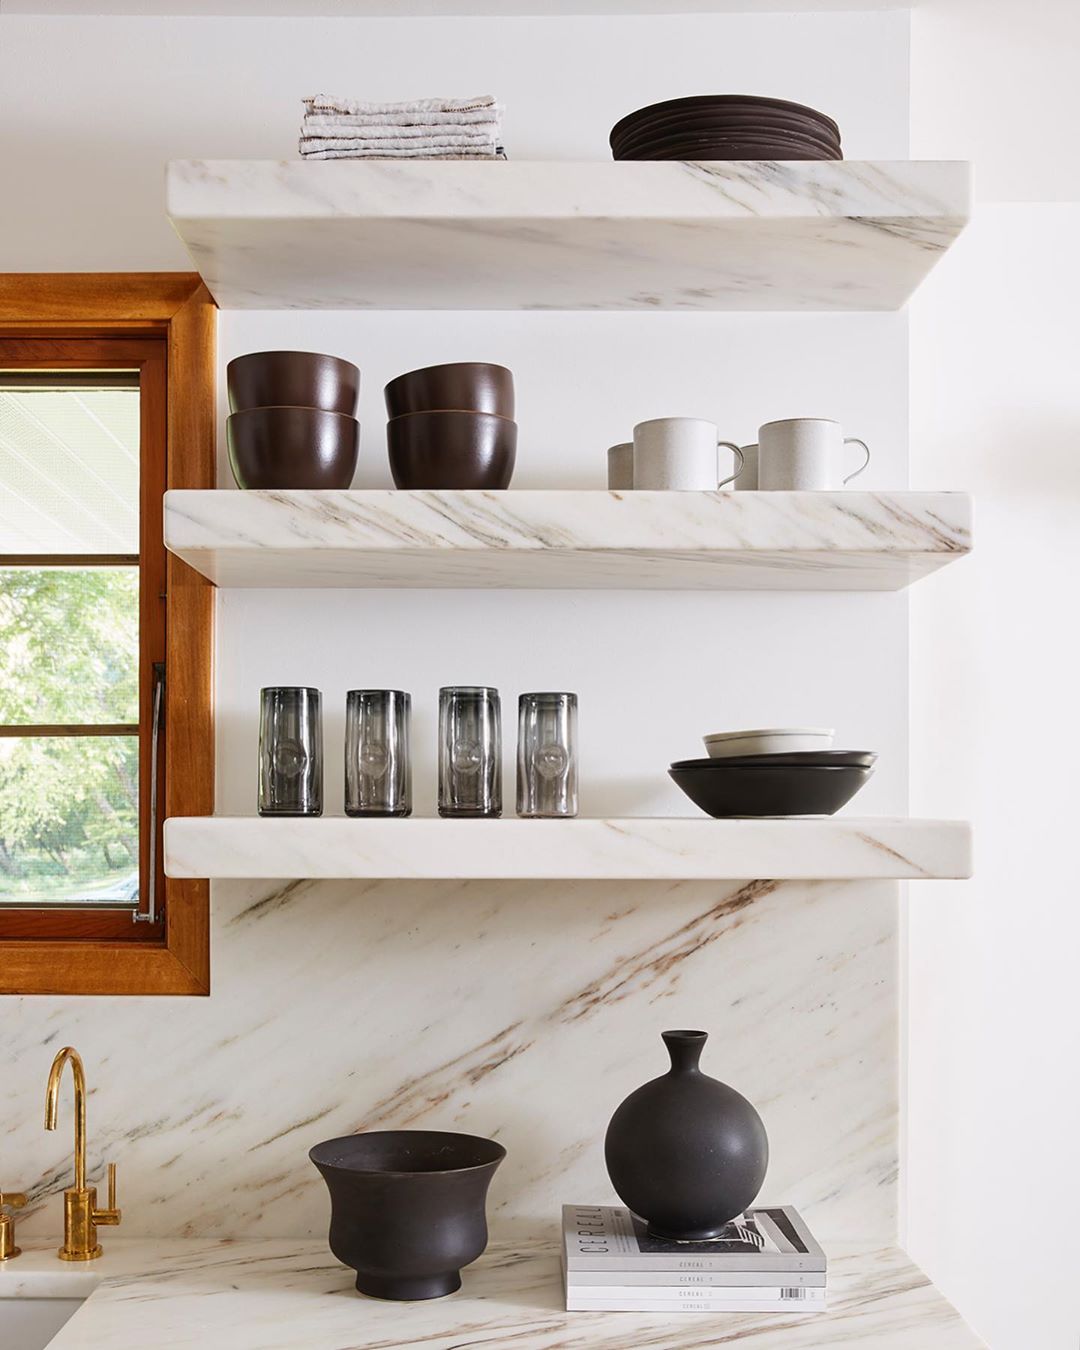 Open shelving in contemporary kitchen. Photo by Instagram user @jkath_designbuild